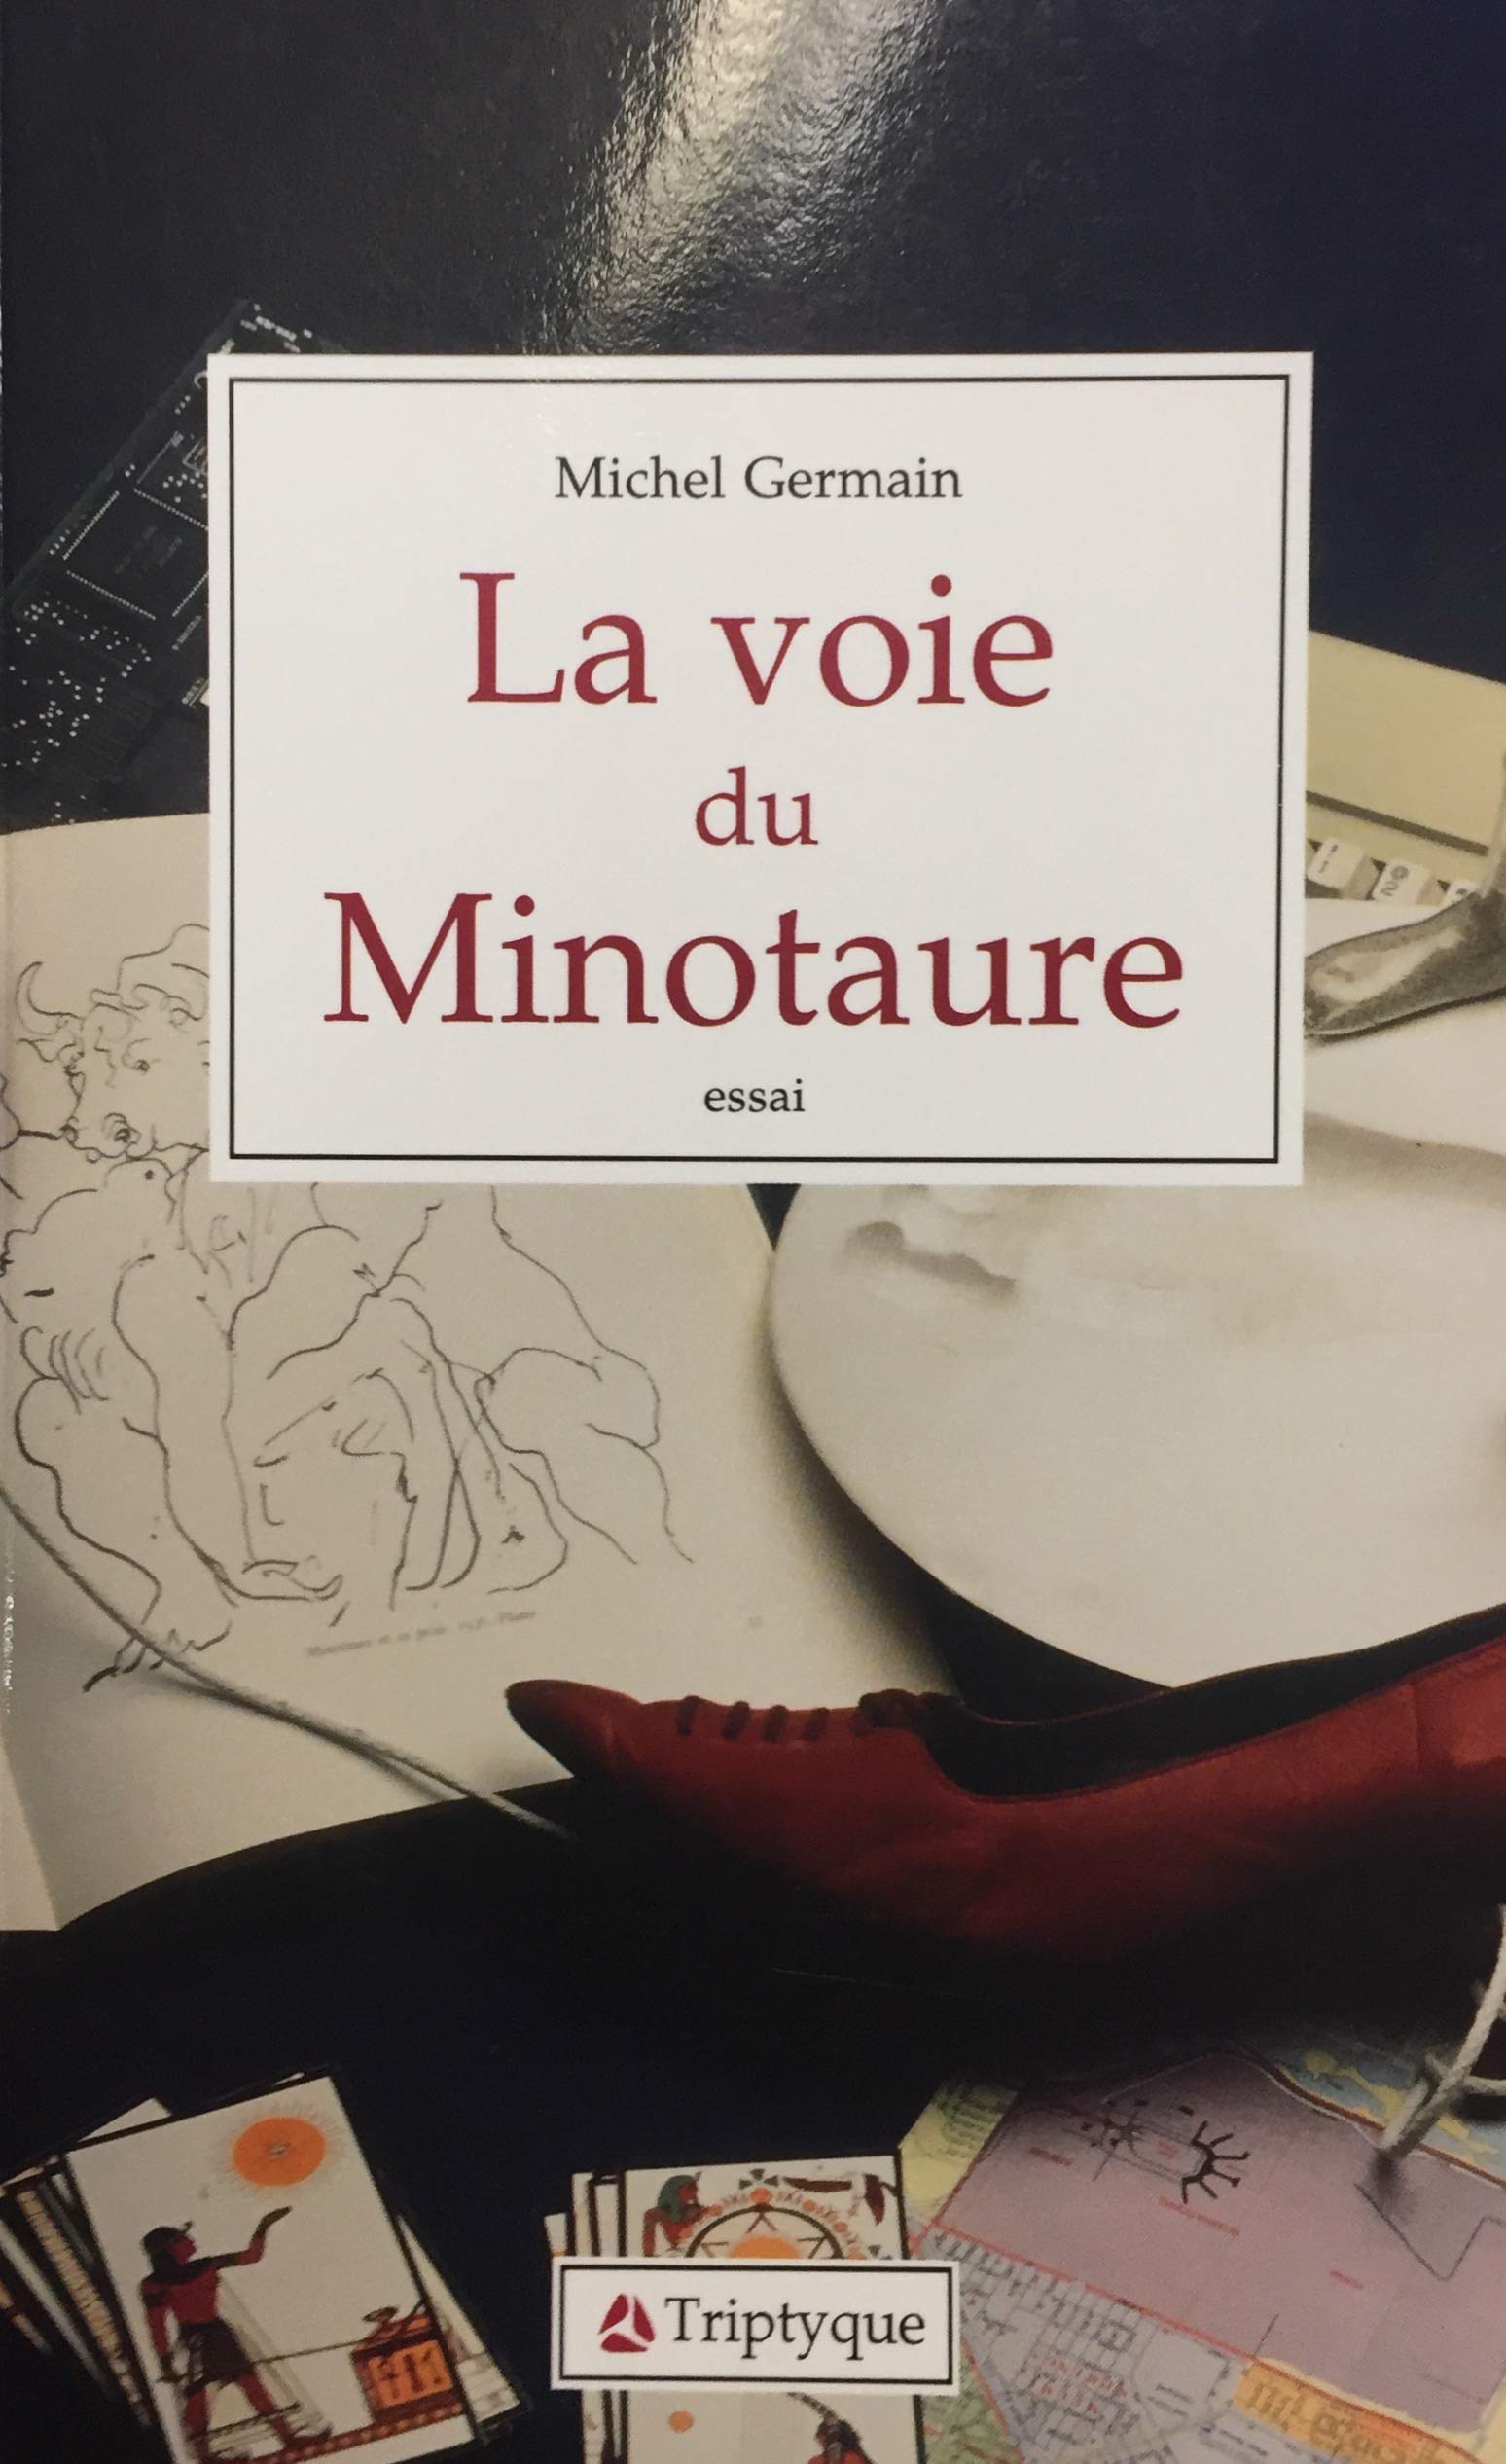 Livre ISBN 2890312380 La voie du Minotaure (Michel Germain)